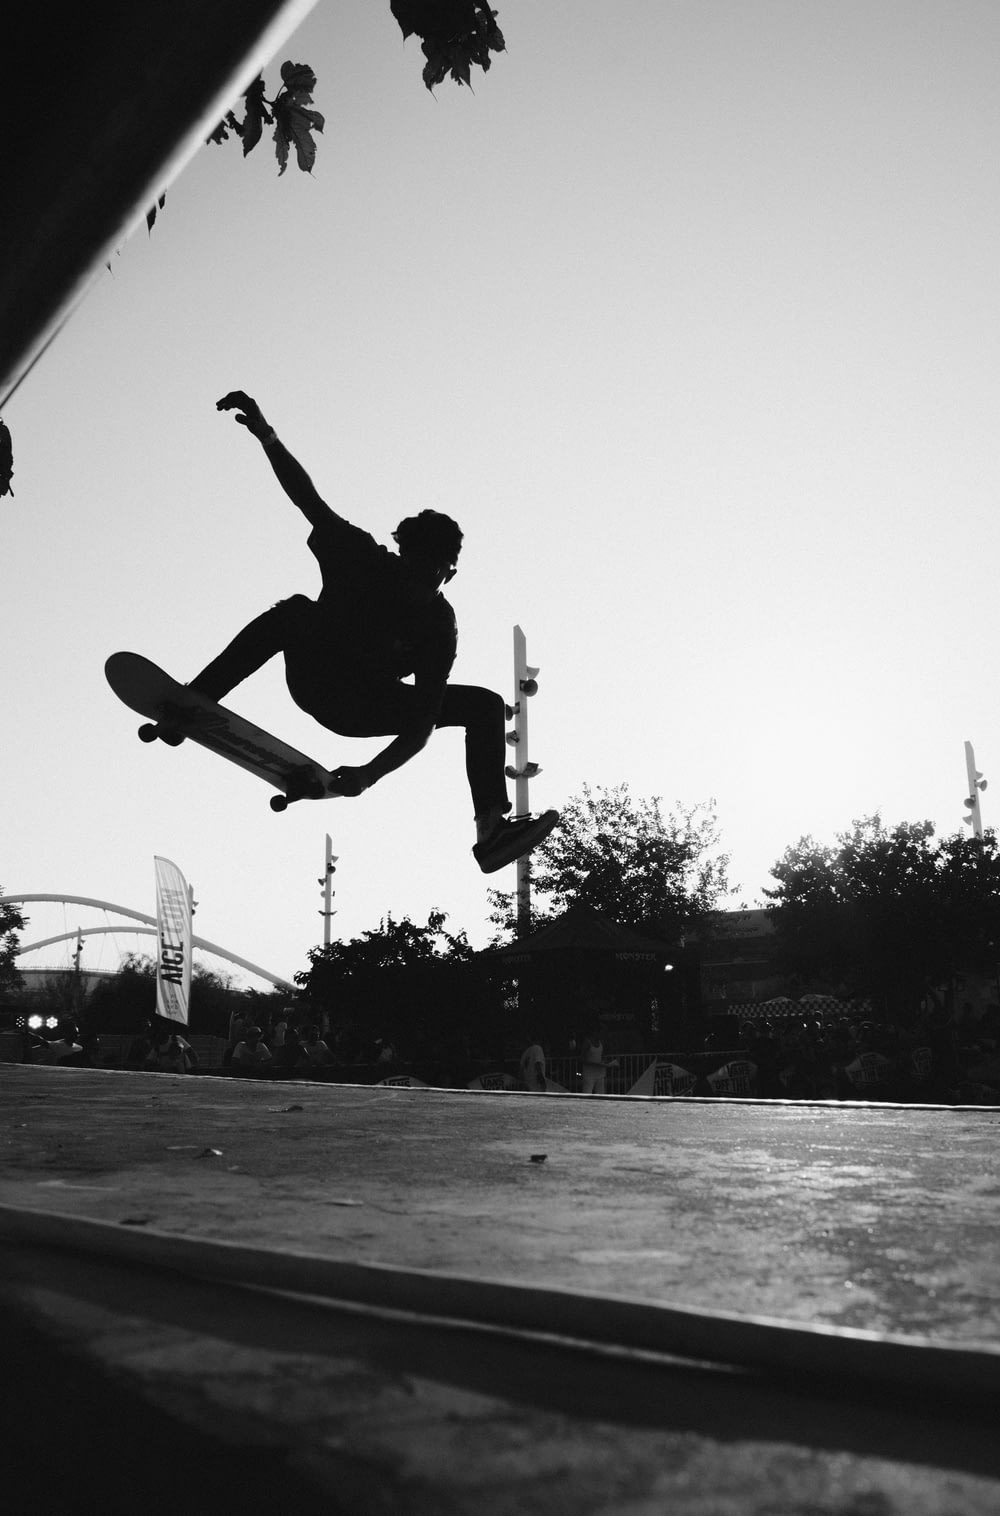 silhouette of man doing skateboard trick